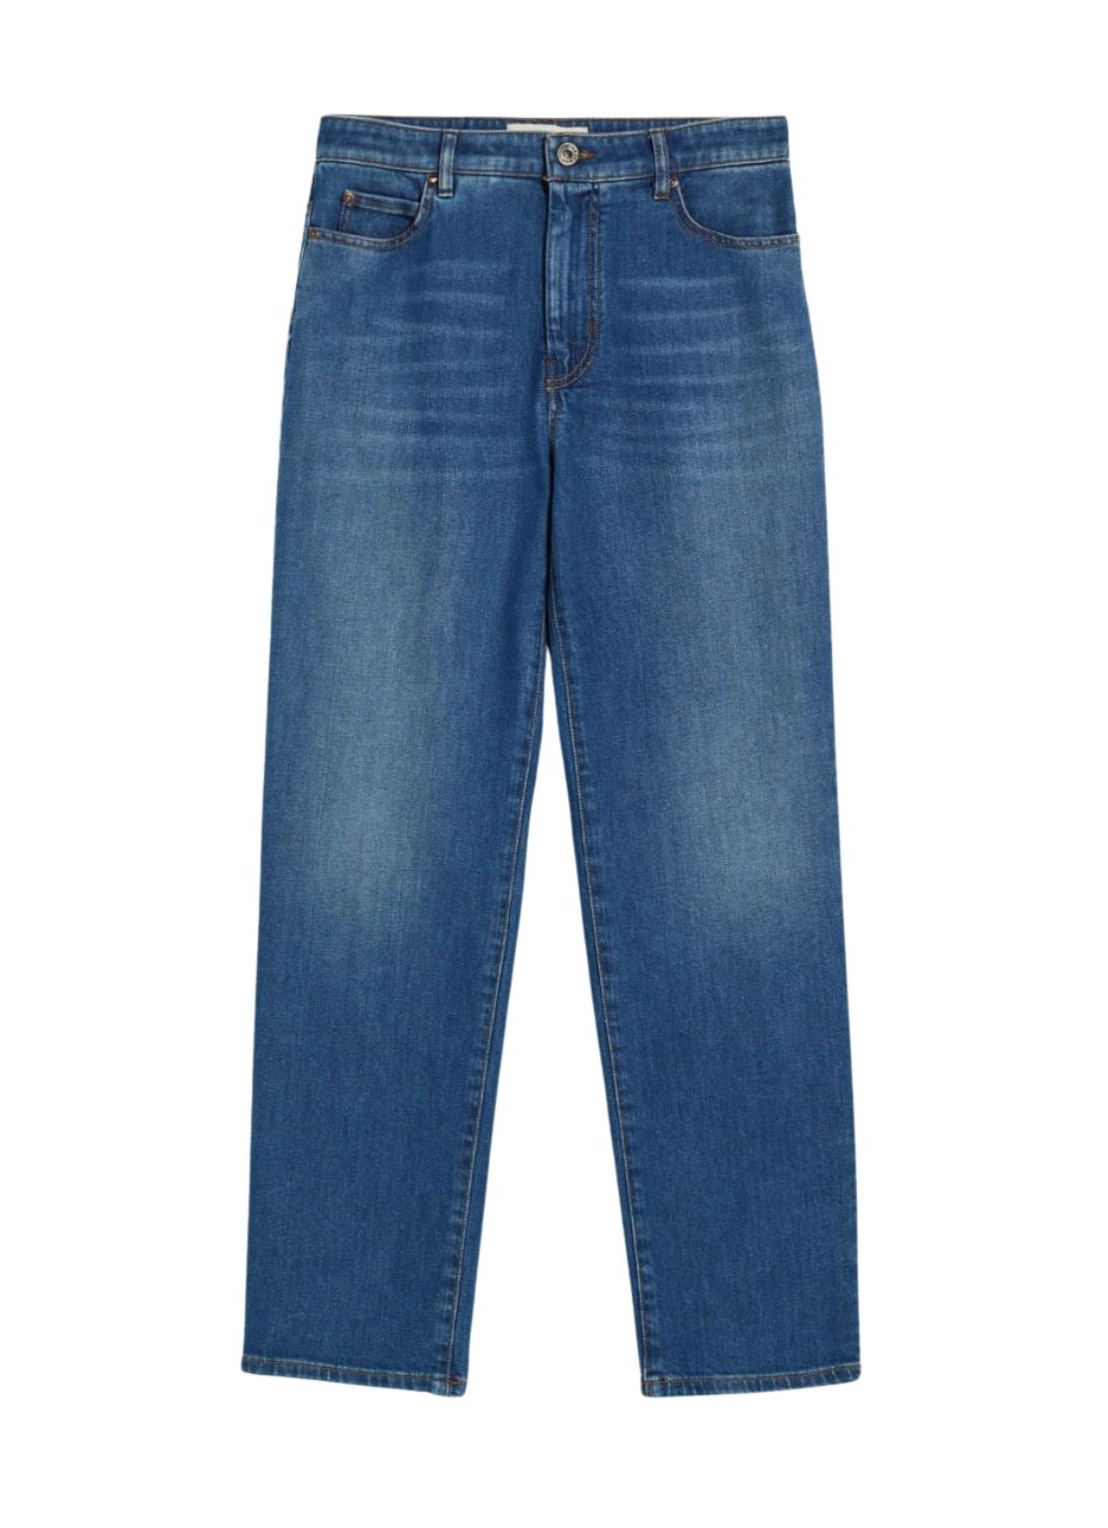 Pantalon jeans weekend max mara denim woman ortisei 2415181061600 008 talla 40
 